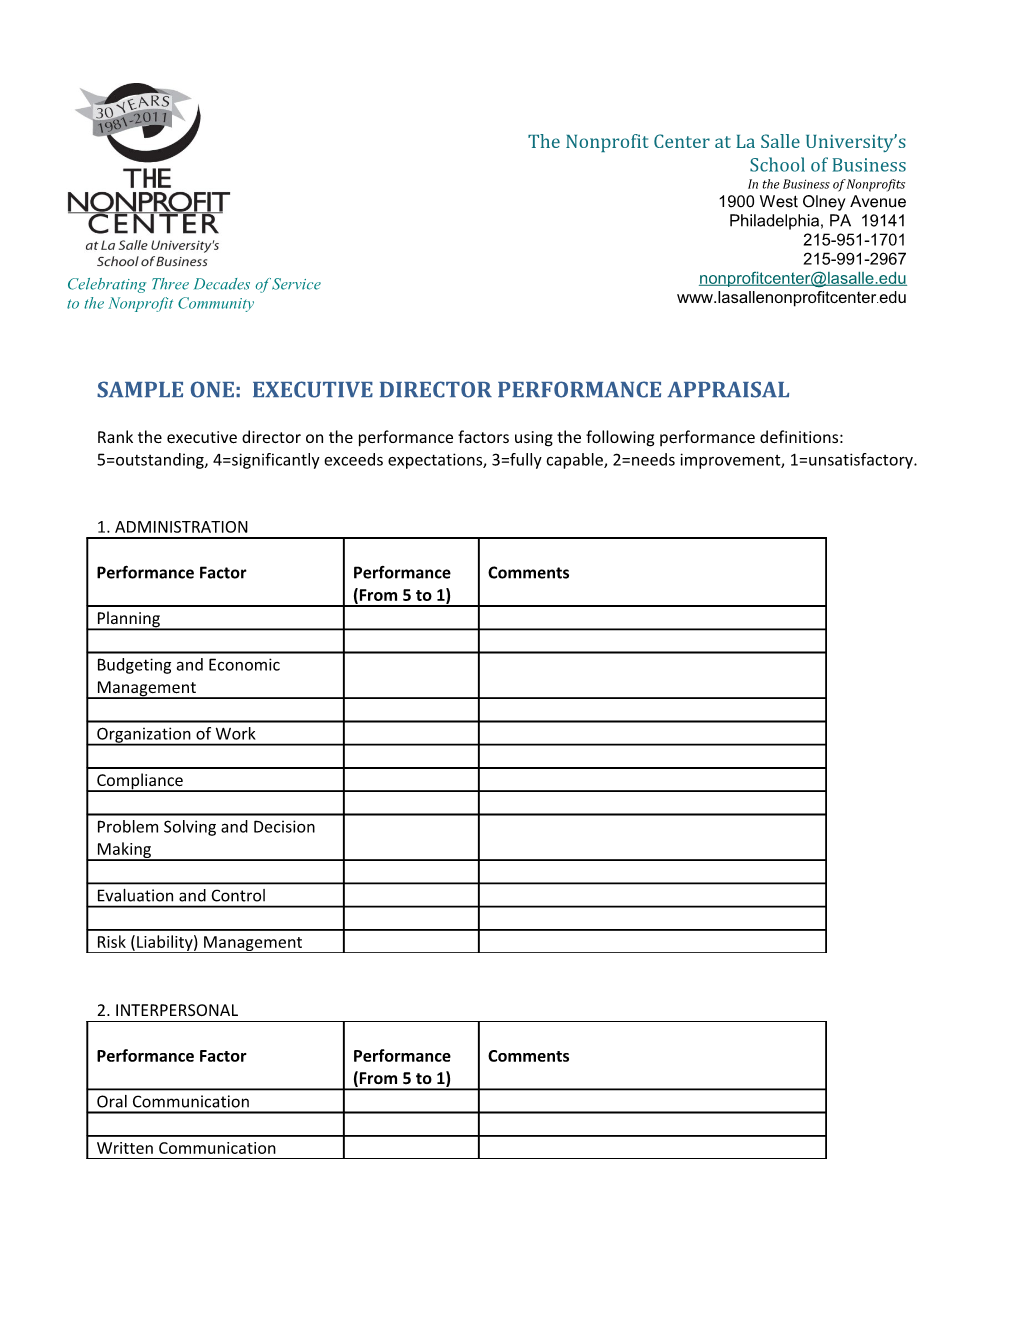 Sample One: Executive Director Performance Appraisal